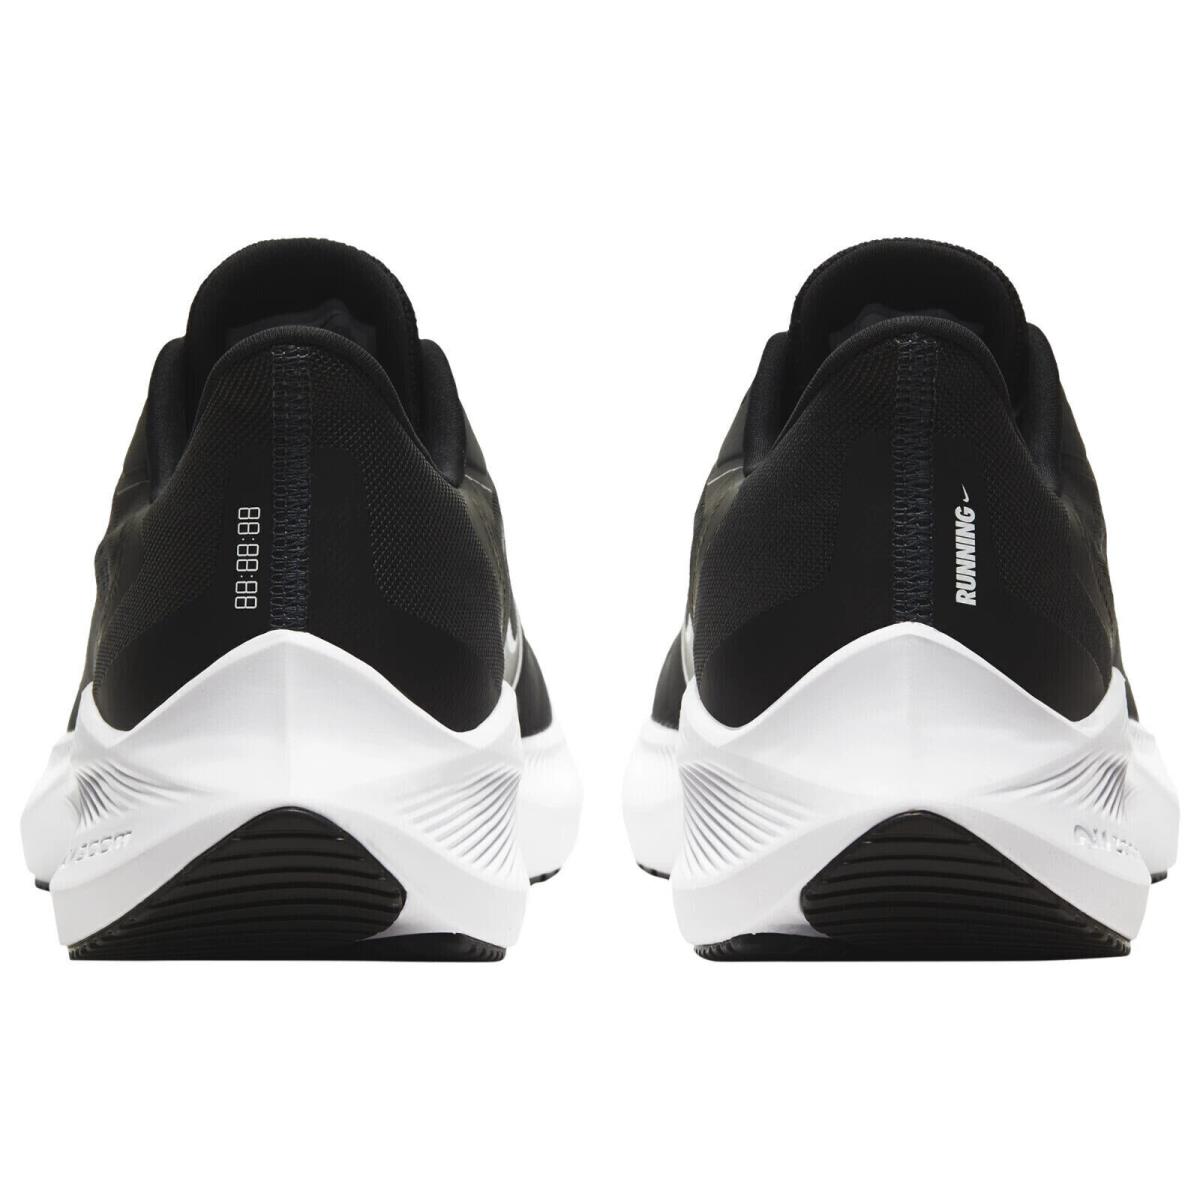 Nike shoes Zoom Winflo - Black 6